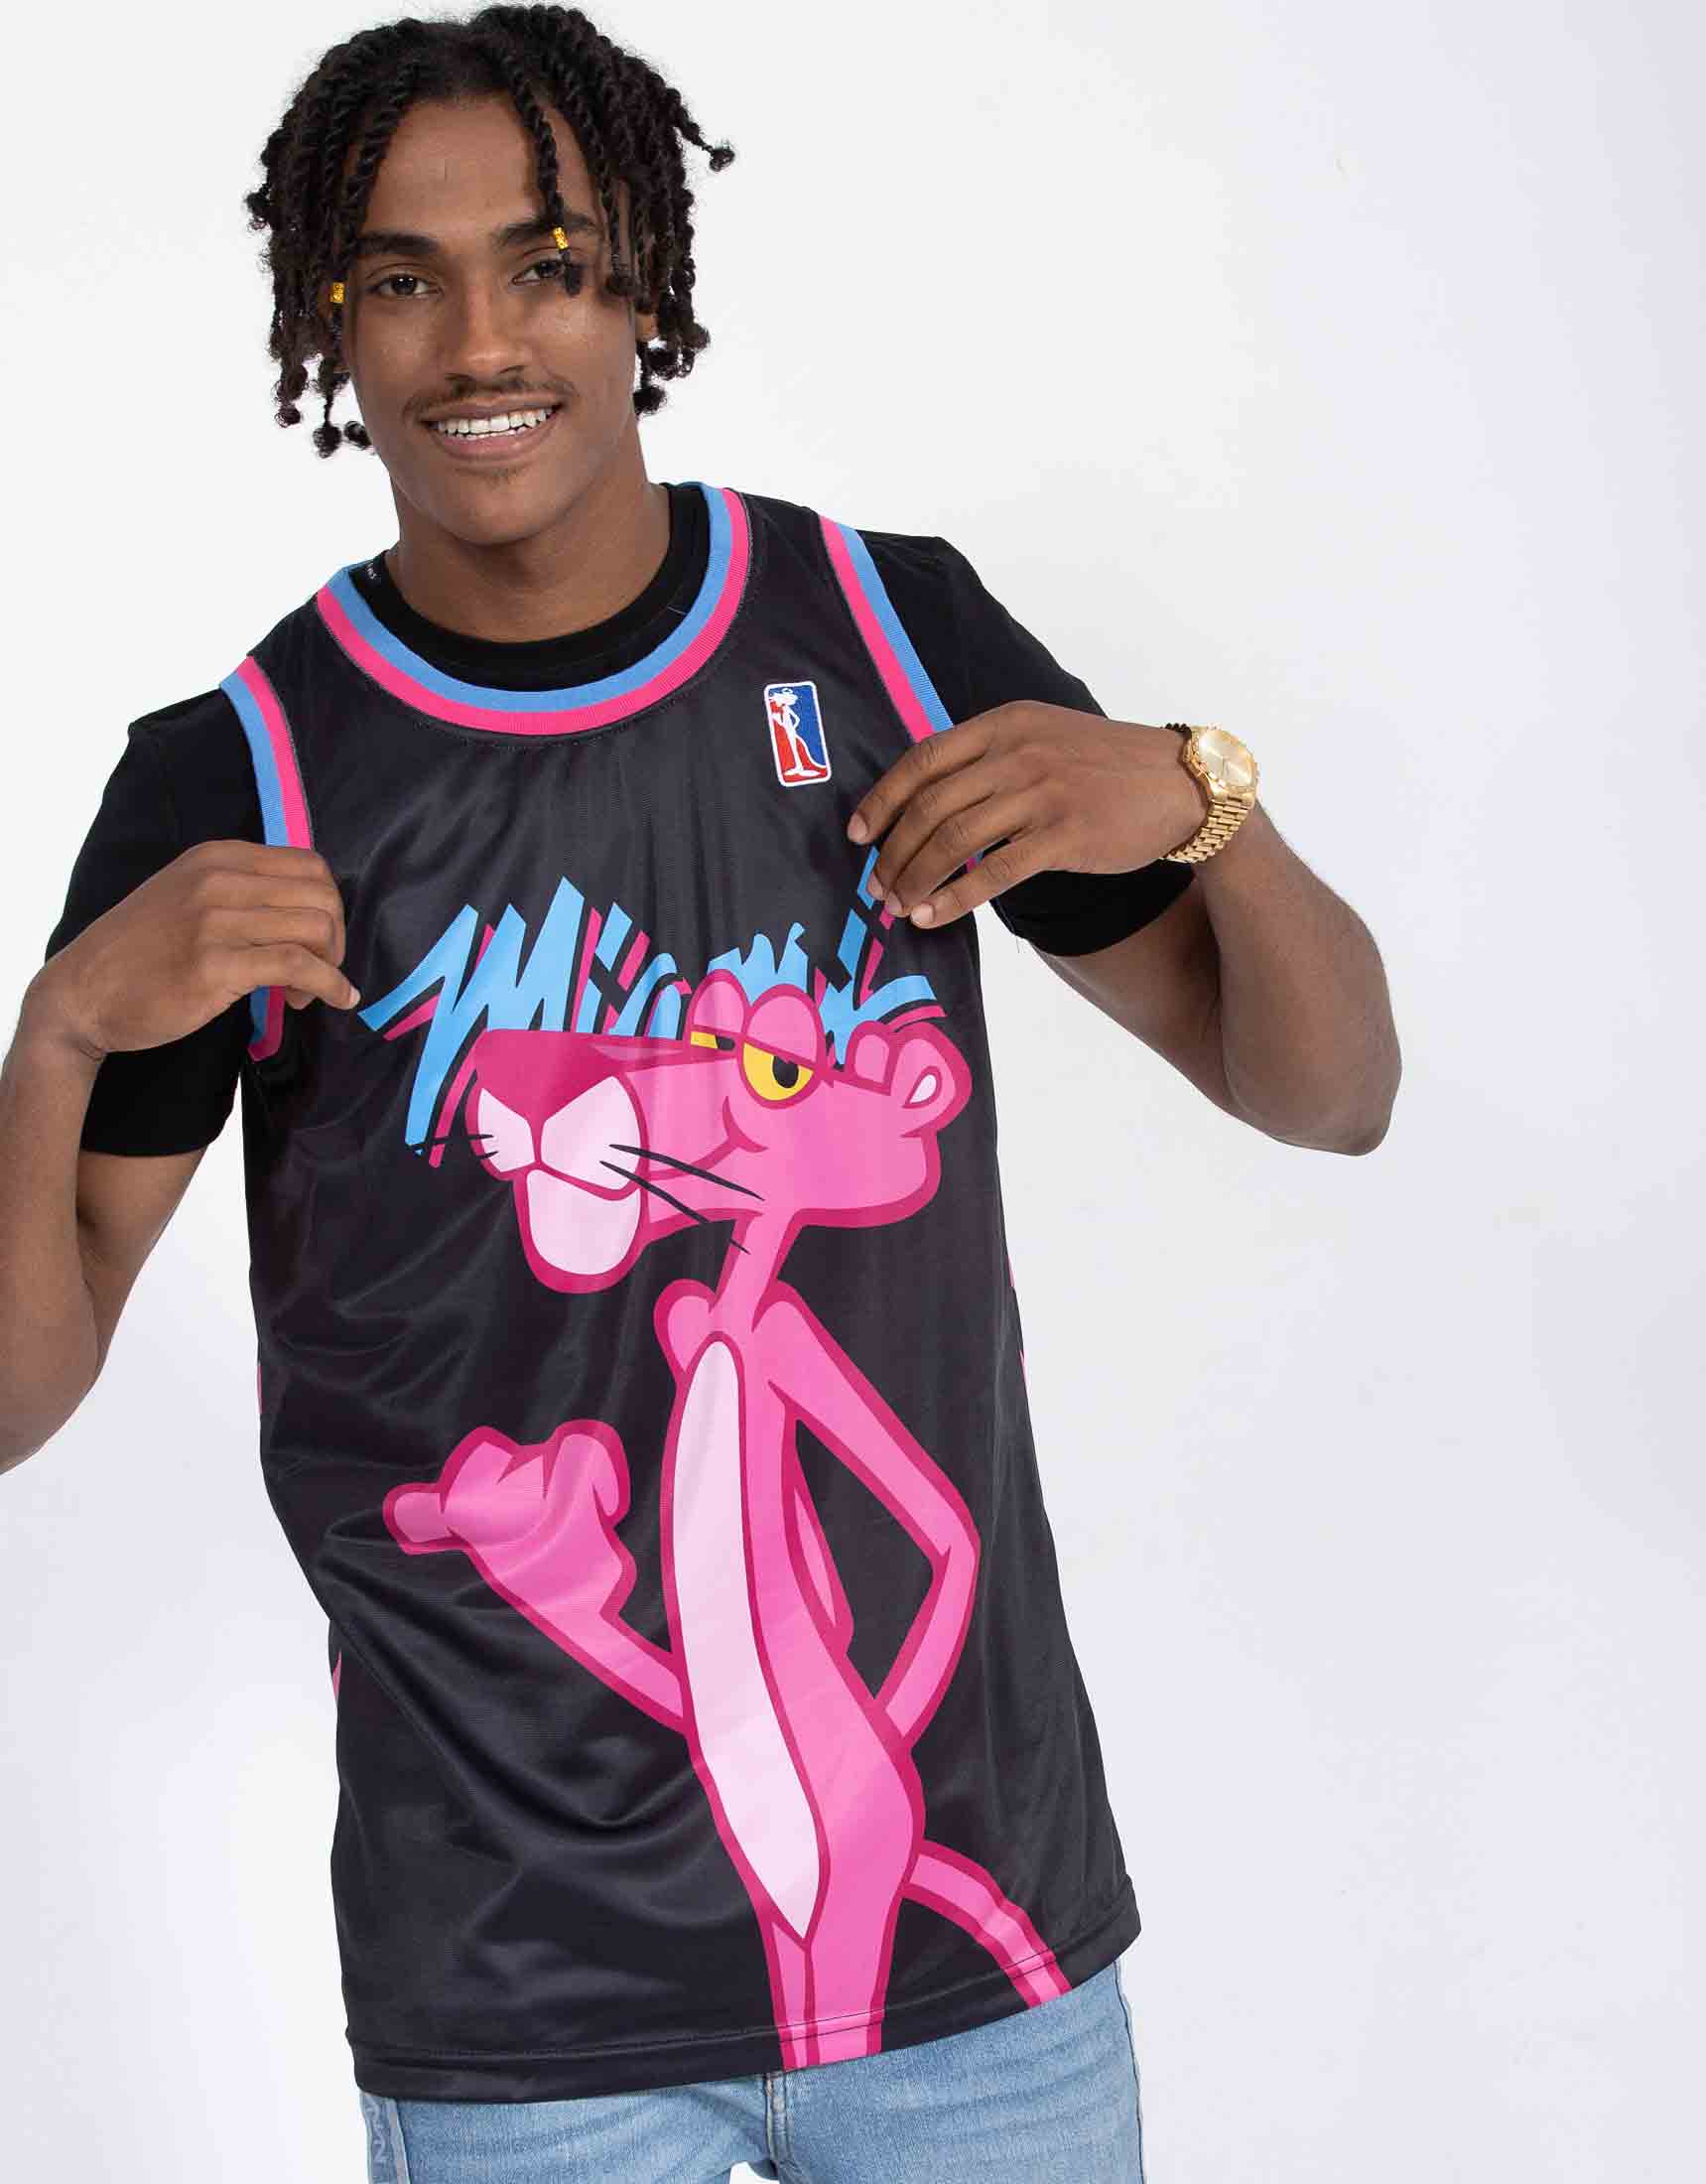 Unlimited Classics Miami x Pink Panther #3 White Basketball Jersey XL